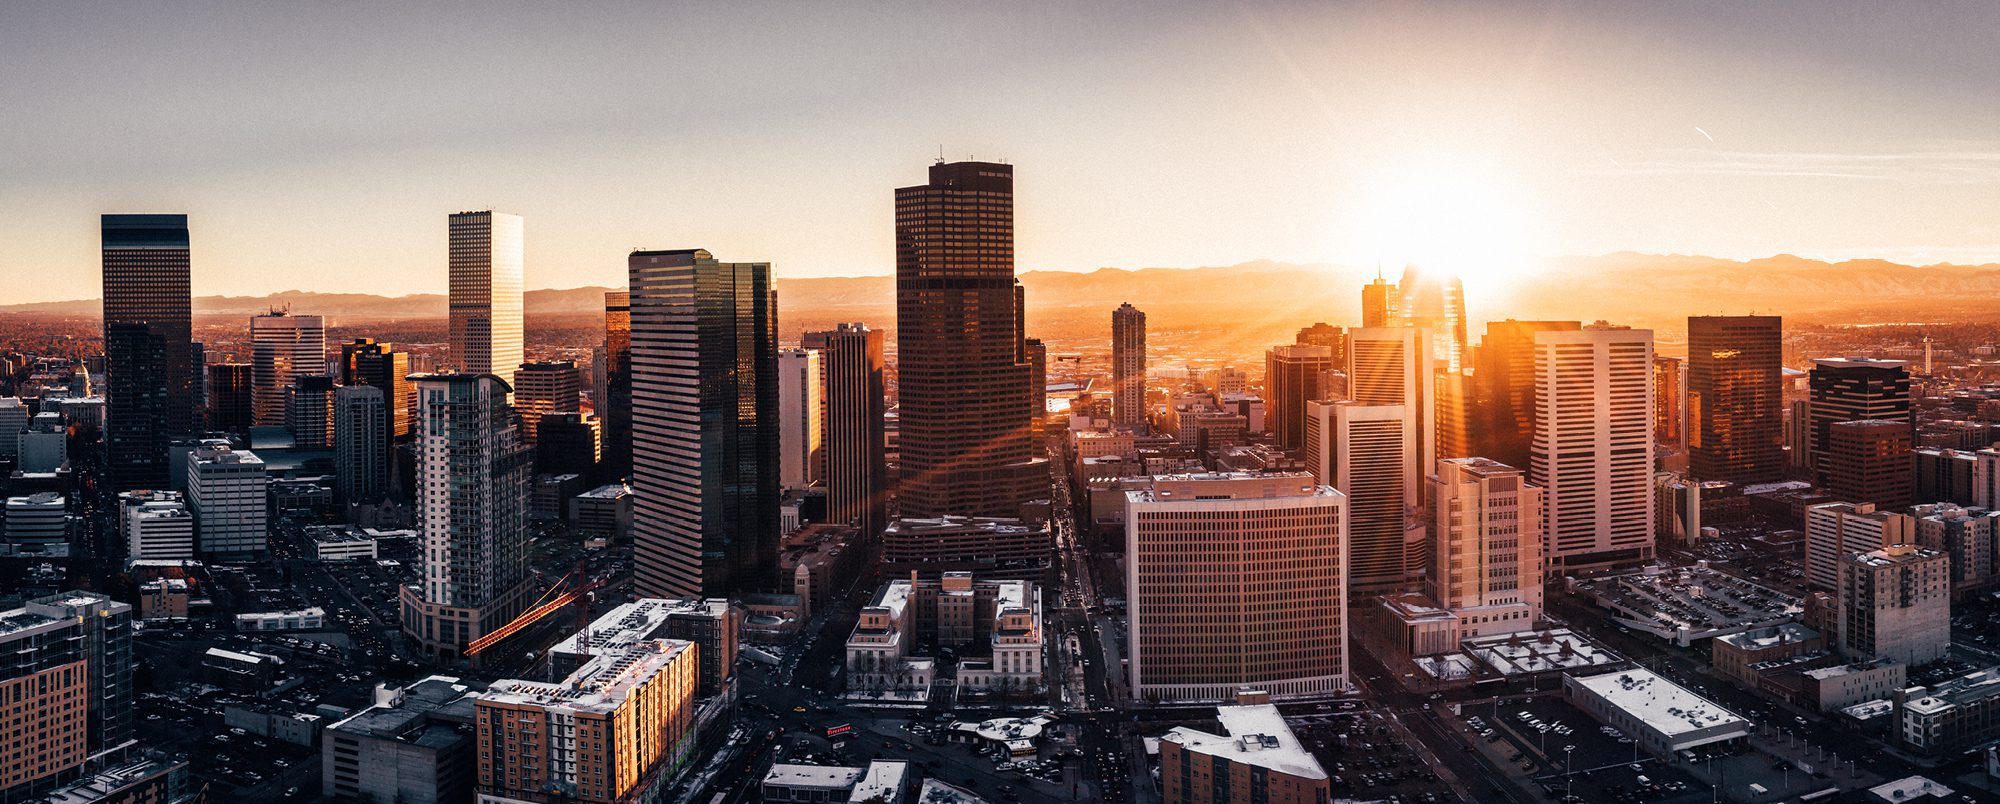 City of Denver at Sunrise